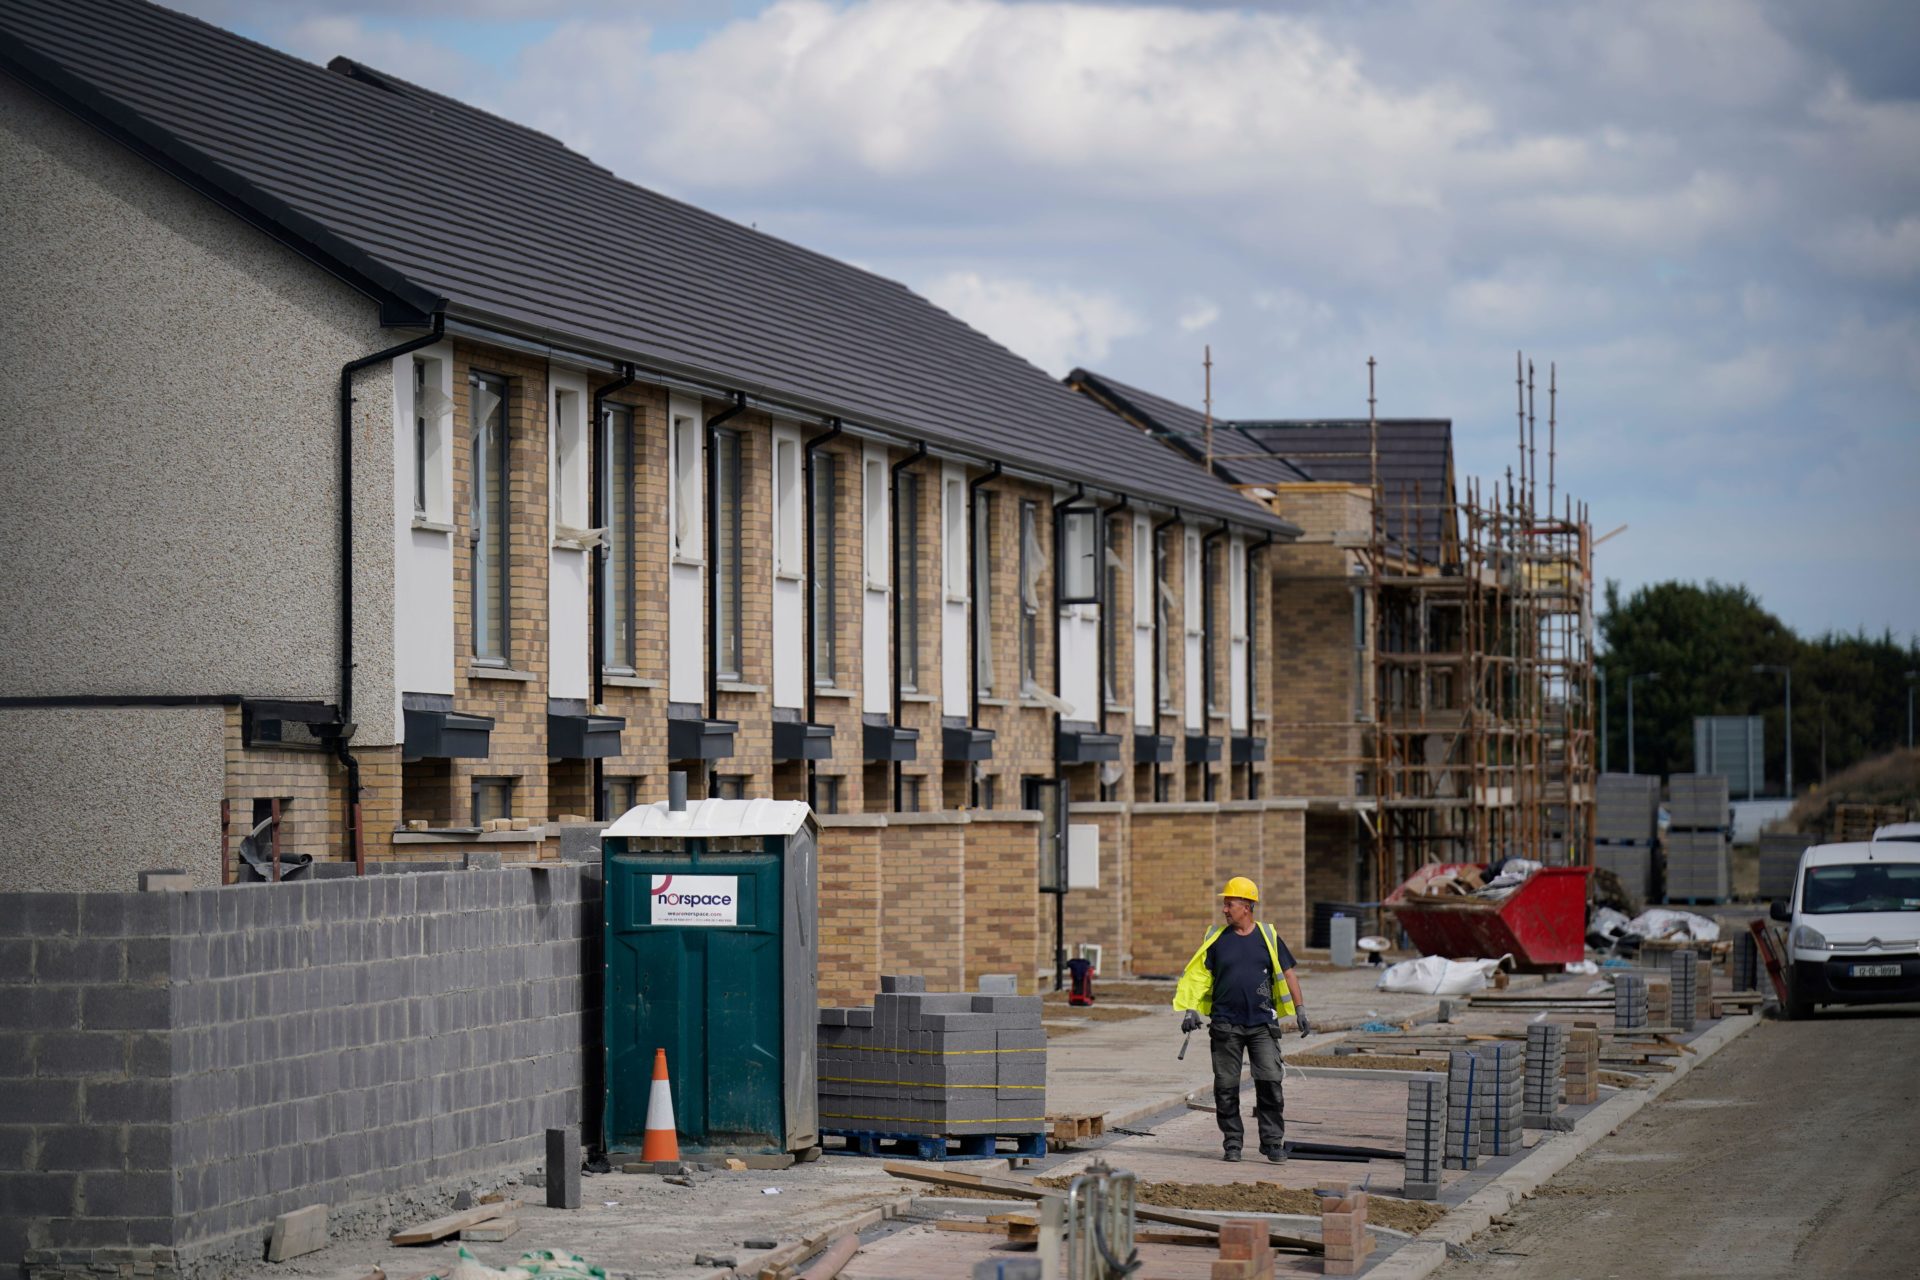 Cost rental homes under construction in Dublin, 23-8-22.